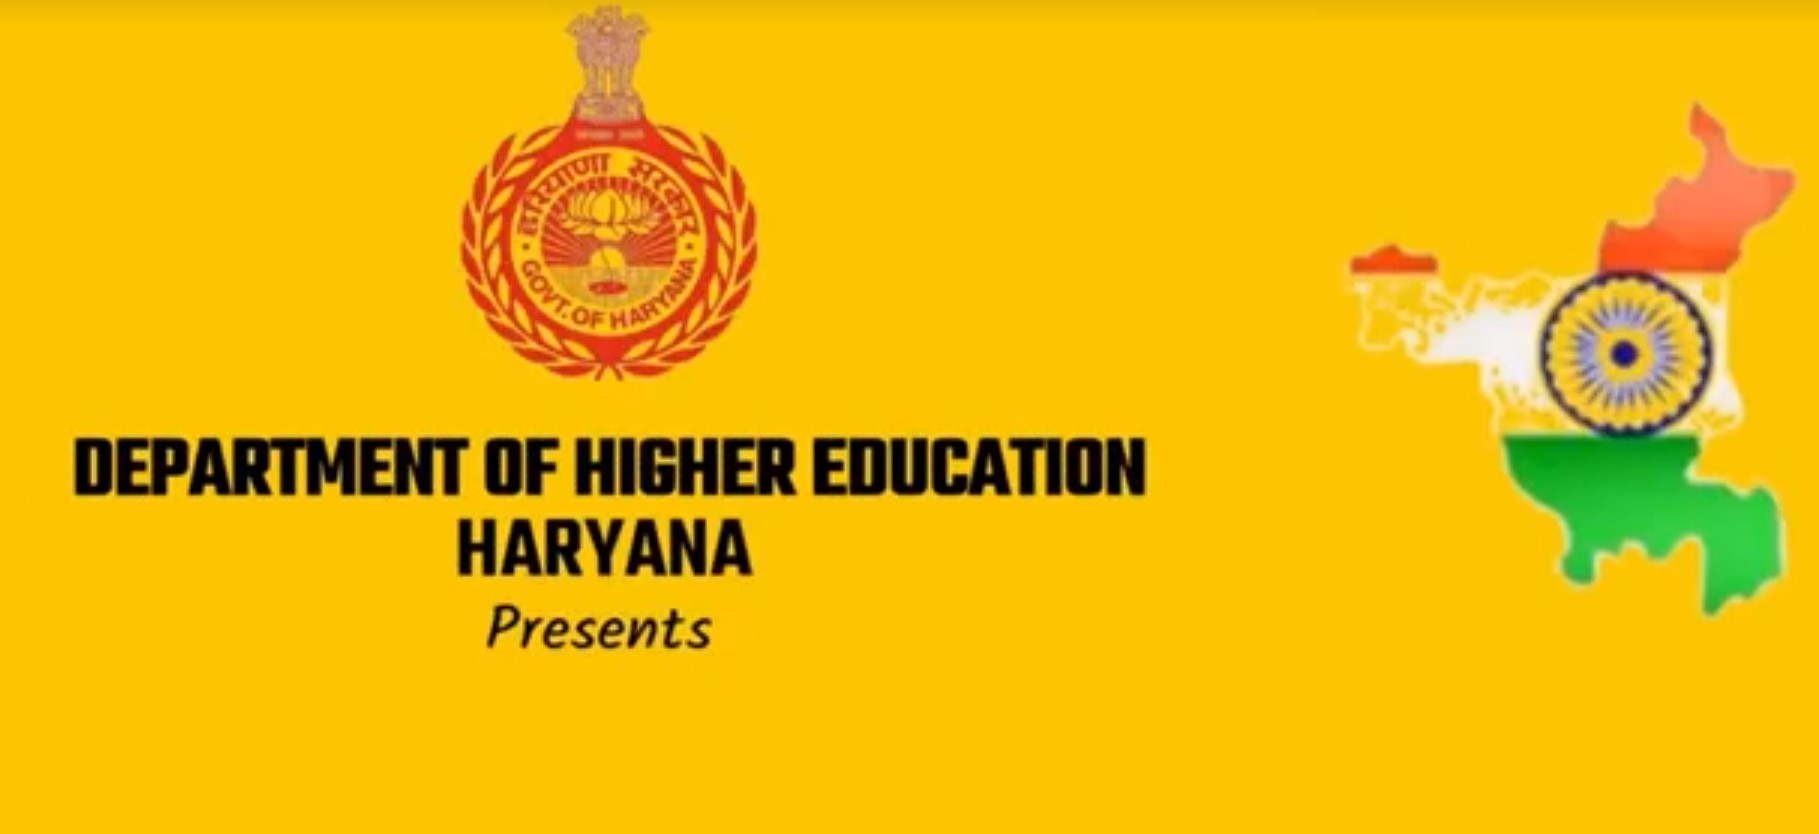 Haryana Department Of Higher Education Is Creating An Online Platform